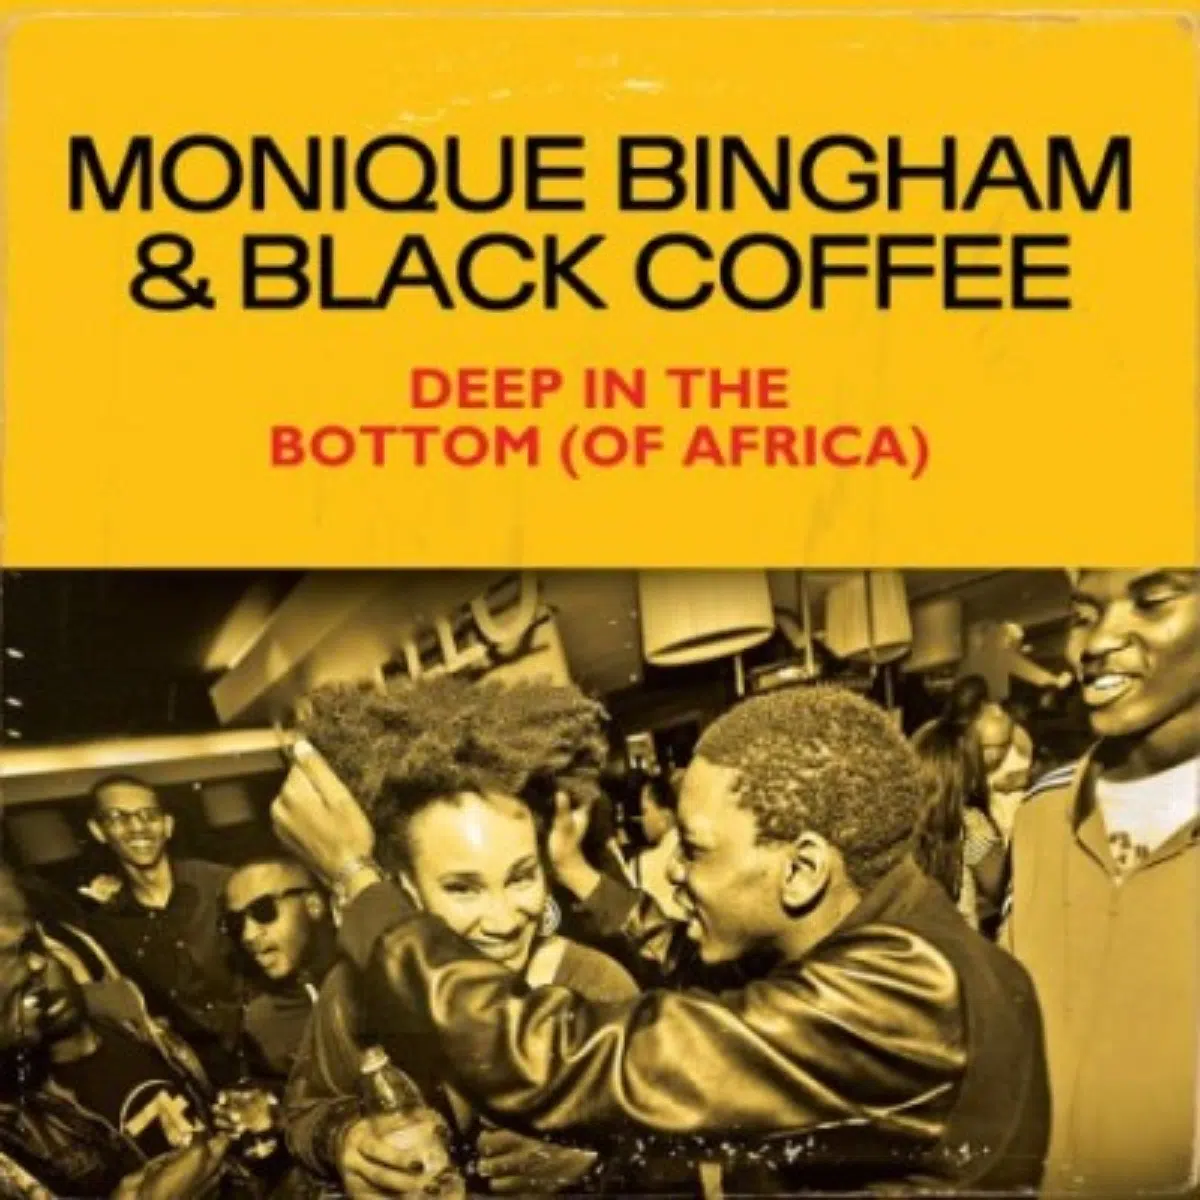 DOWNLOAD: Monique Bingham, Black Coffee – “Deep in the Bottom” (of Africa) Mp3